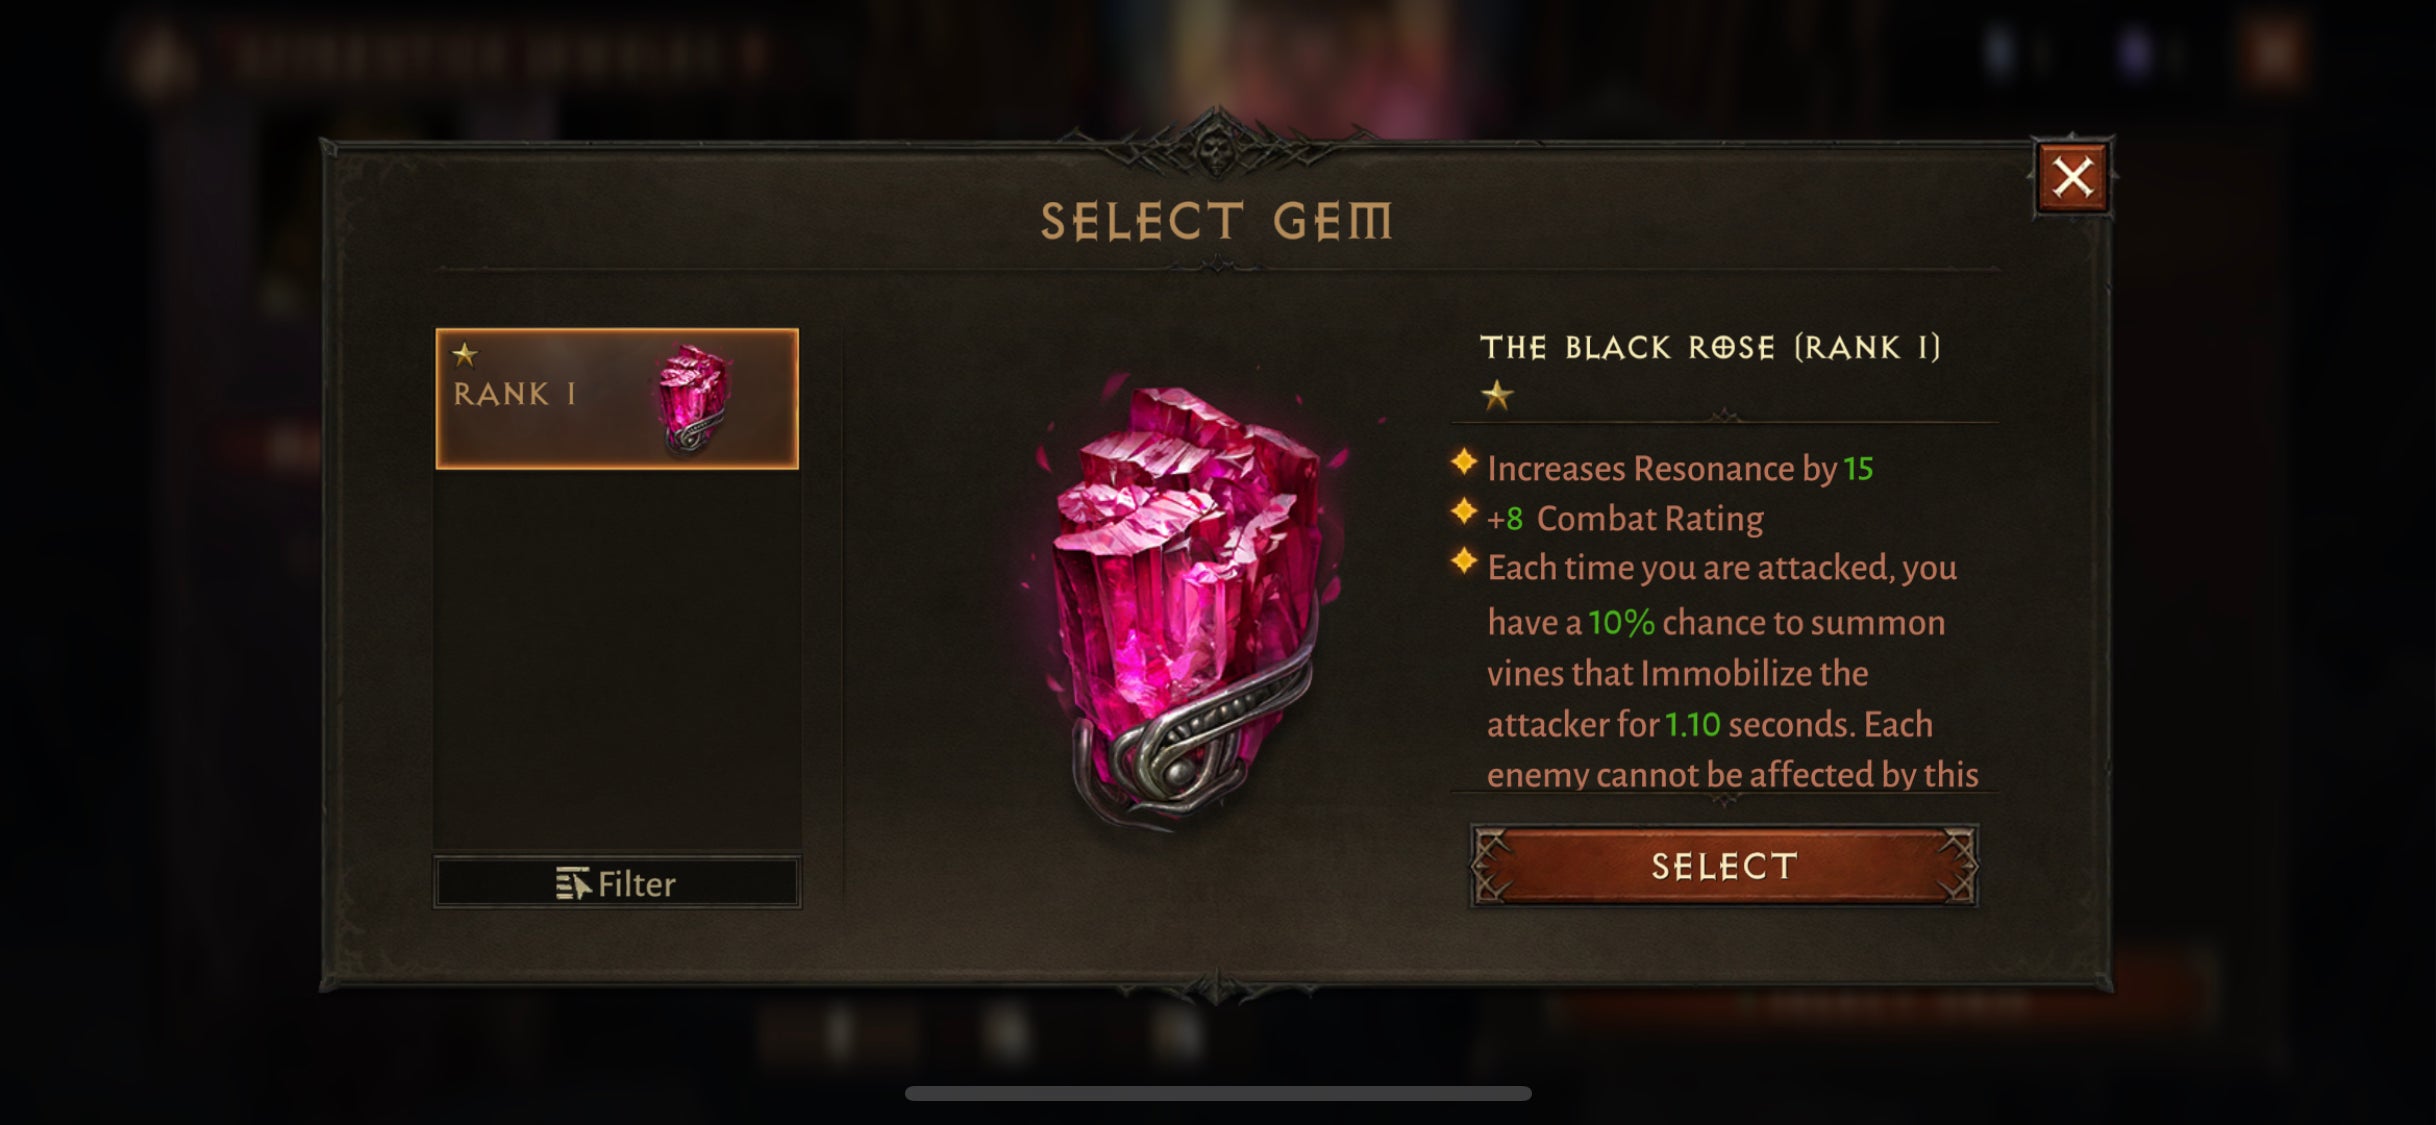 A status screen showing the powerful Black Rose Legendary Gem in Diablo Immortal